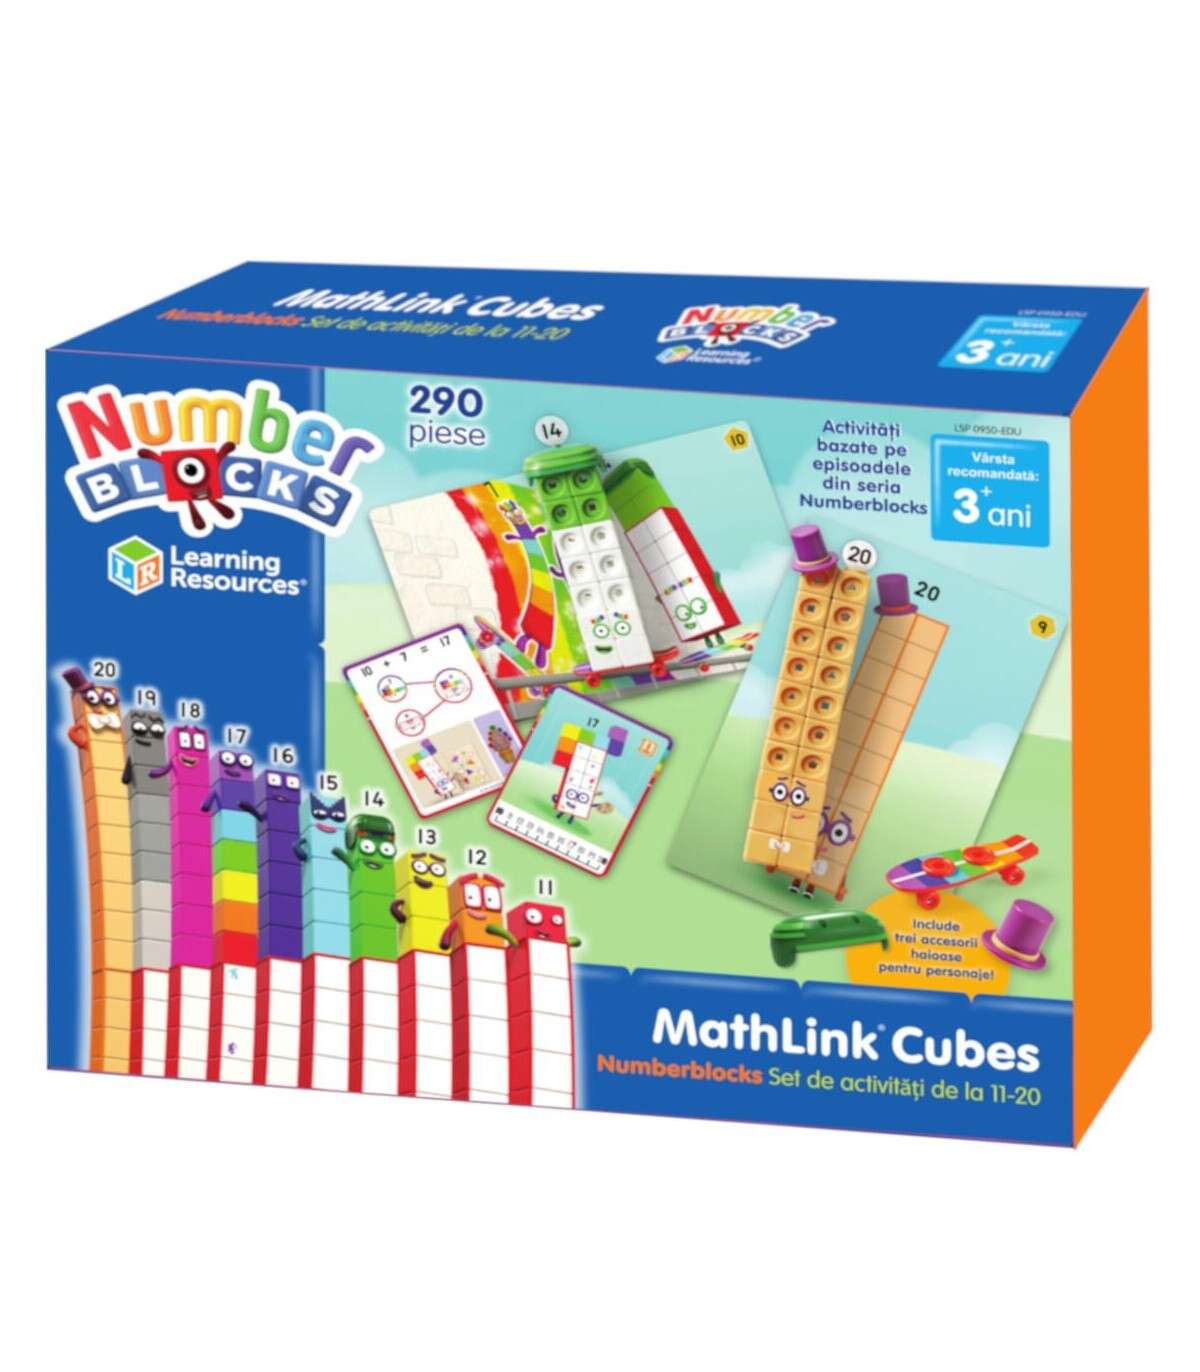 Joc educativ - Numberlocks - MathLink Cubes, 290 piese | Learning Resources